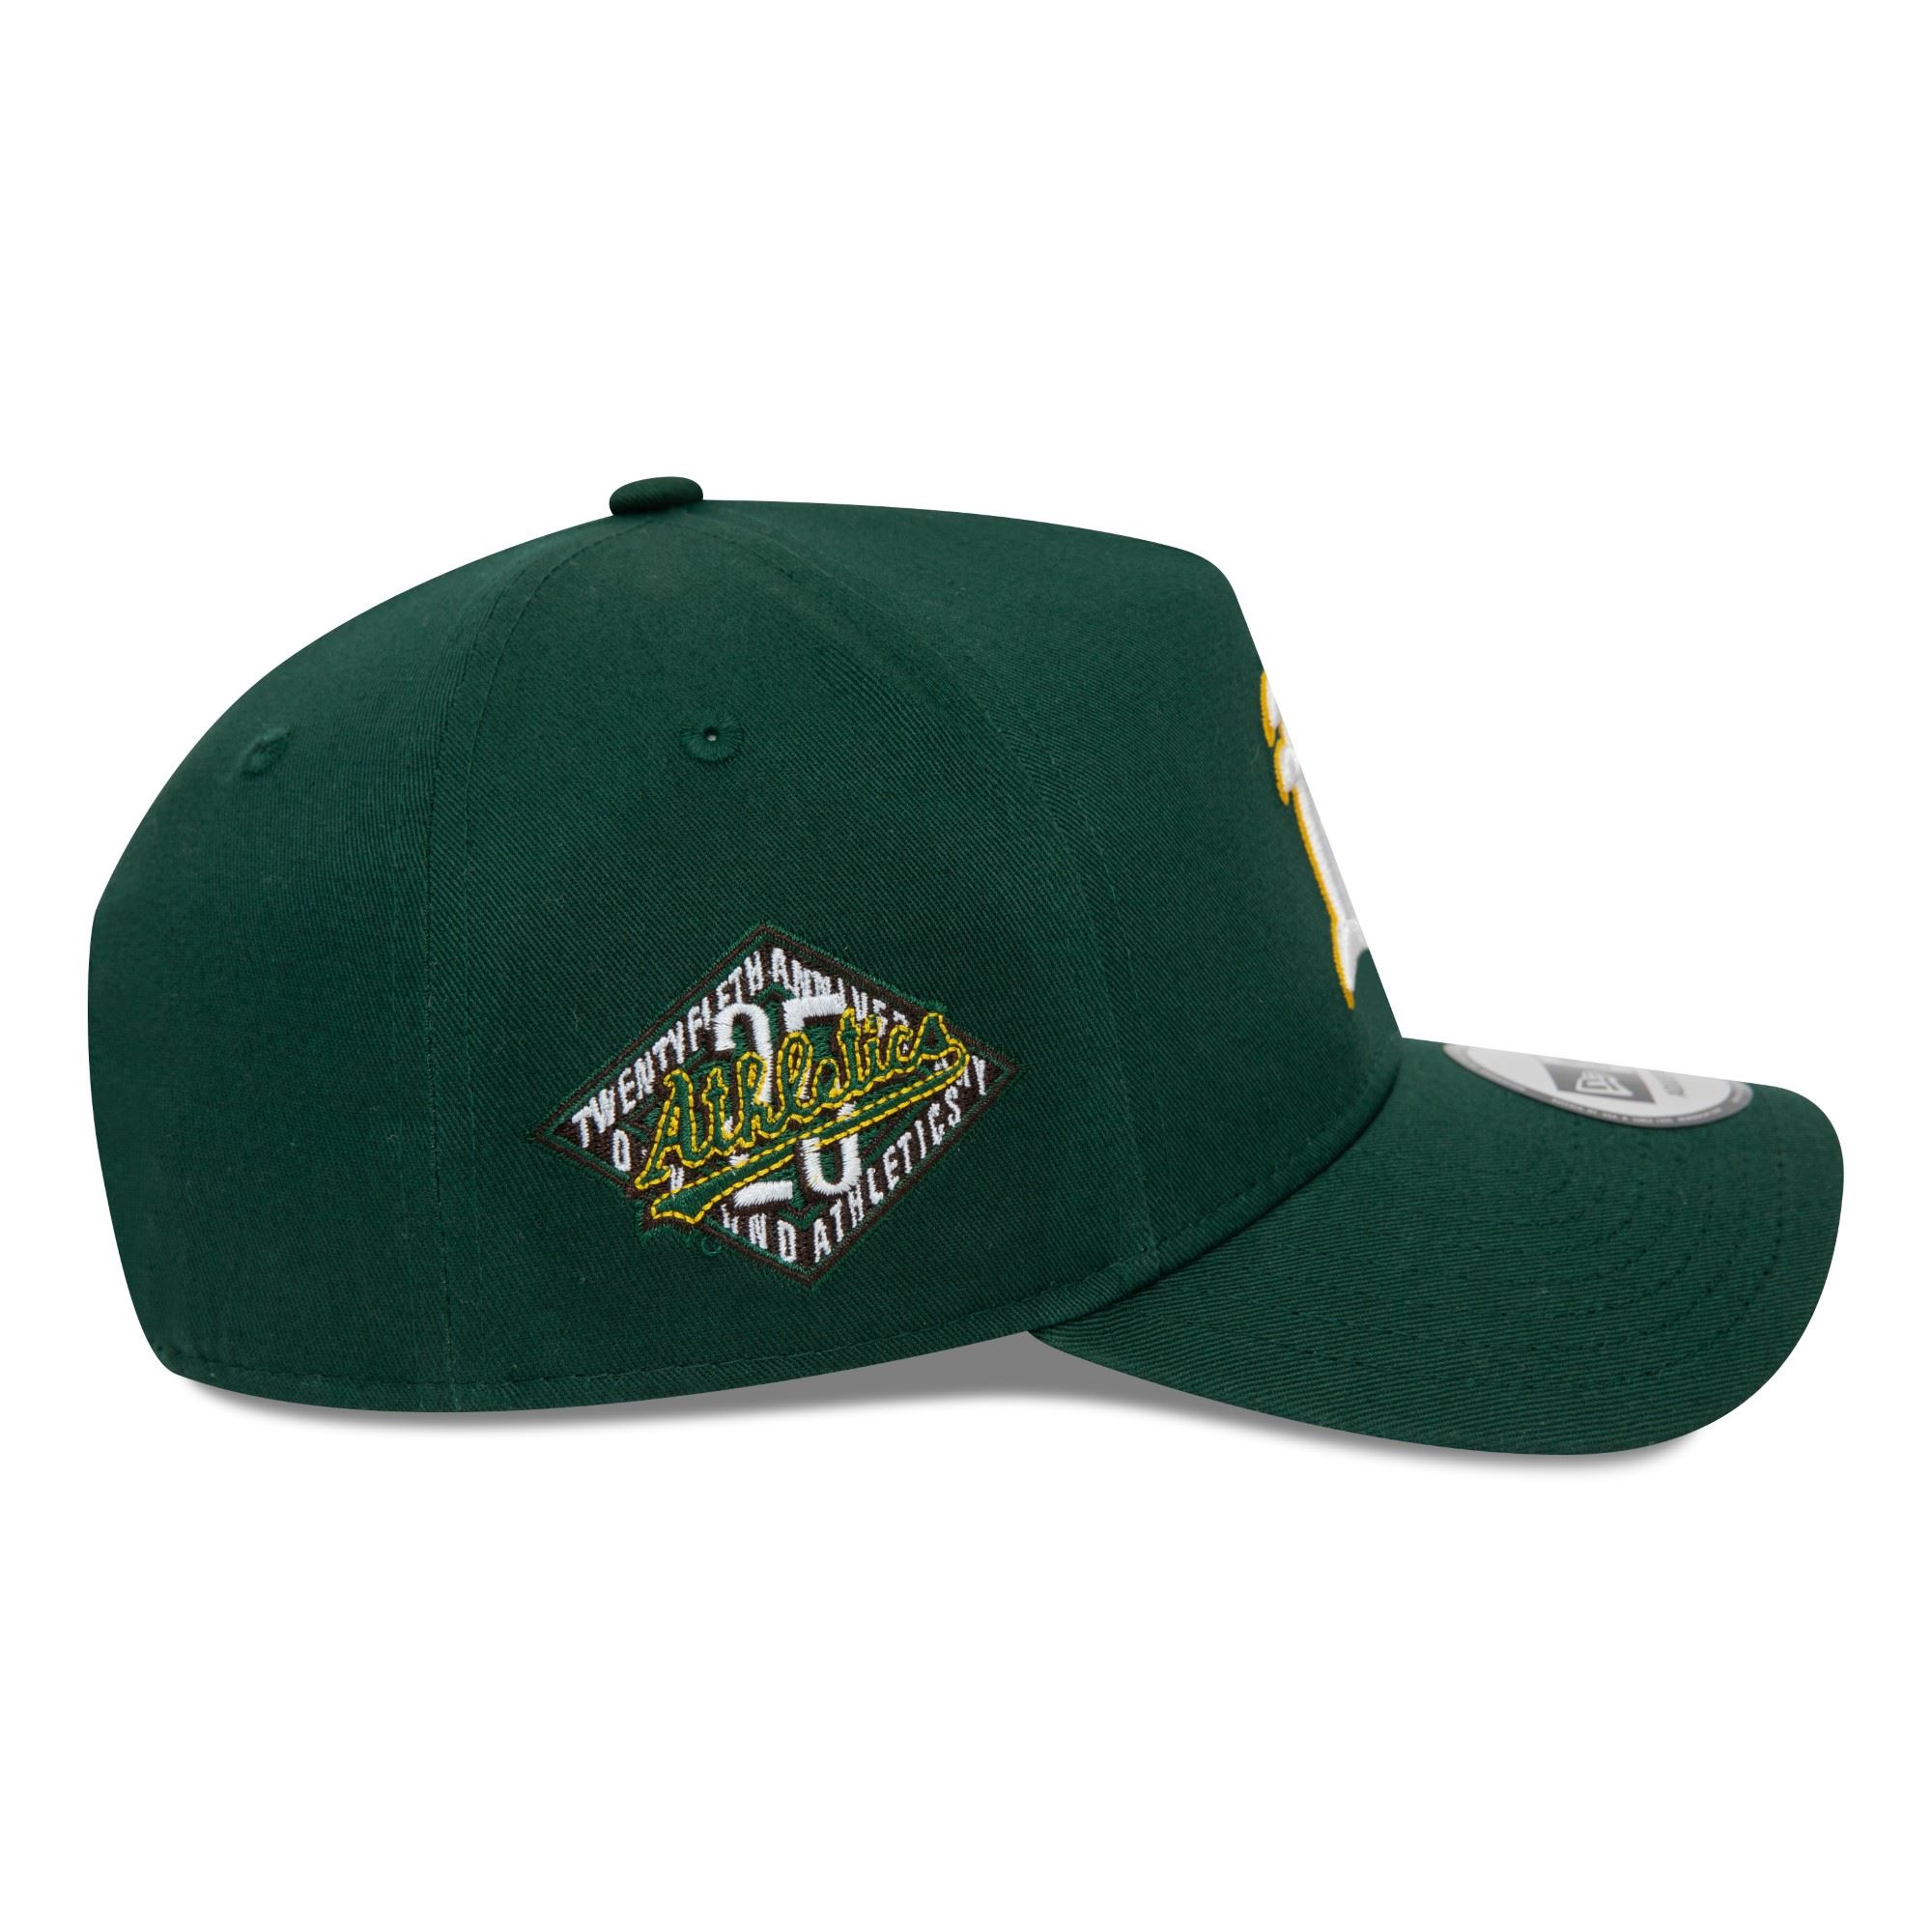 Oakland Athletics MLB 25th Anniversary Sidepatch Green E-Frame Snapback Cap